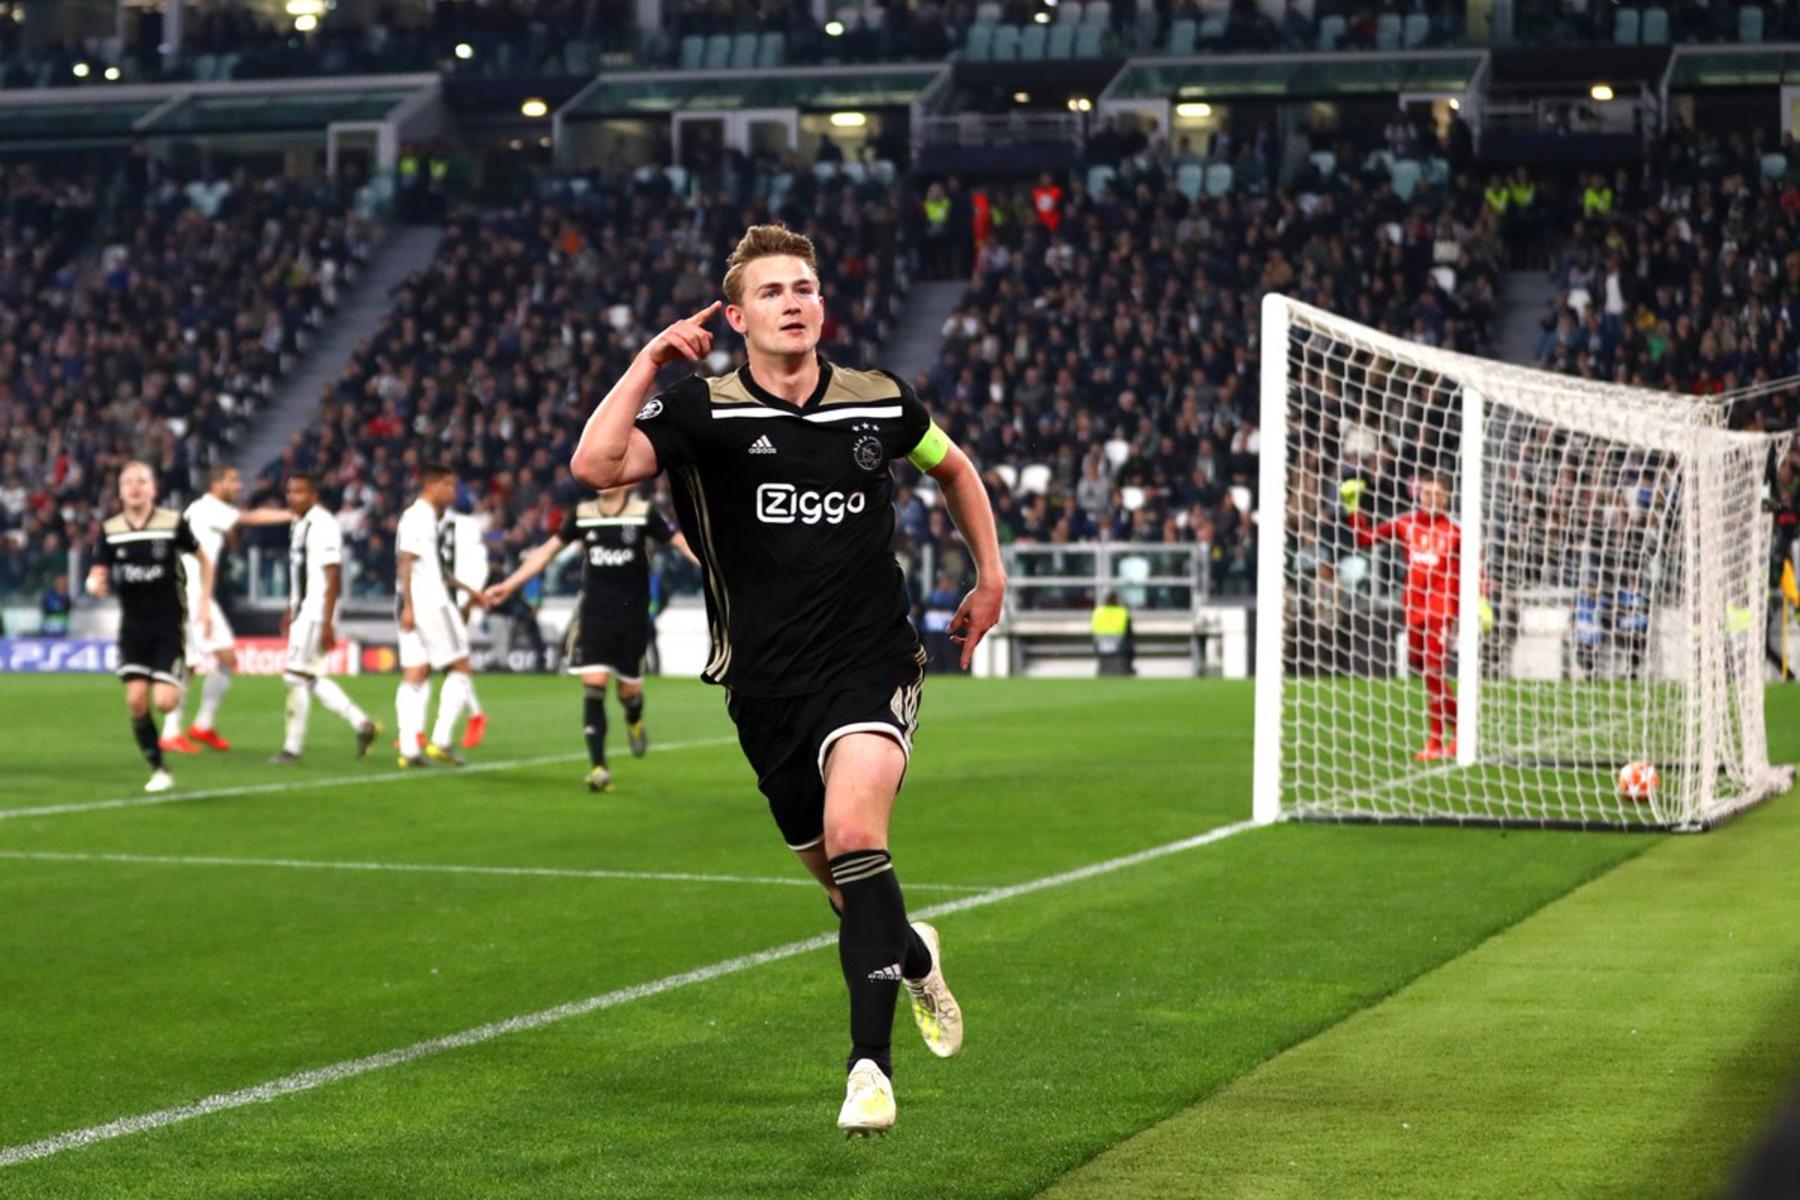 El juvenil holandés Matthijs de Ligt dio el triunfo a los 67 minutos con un gol de cabeza que venció el arco de la Juventus. (Especial)